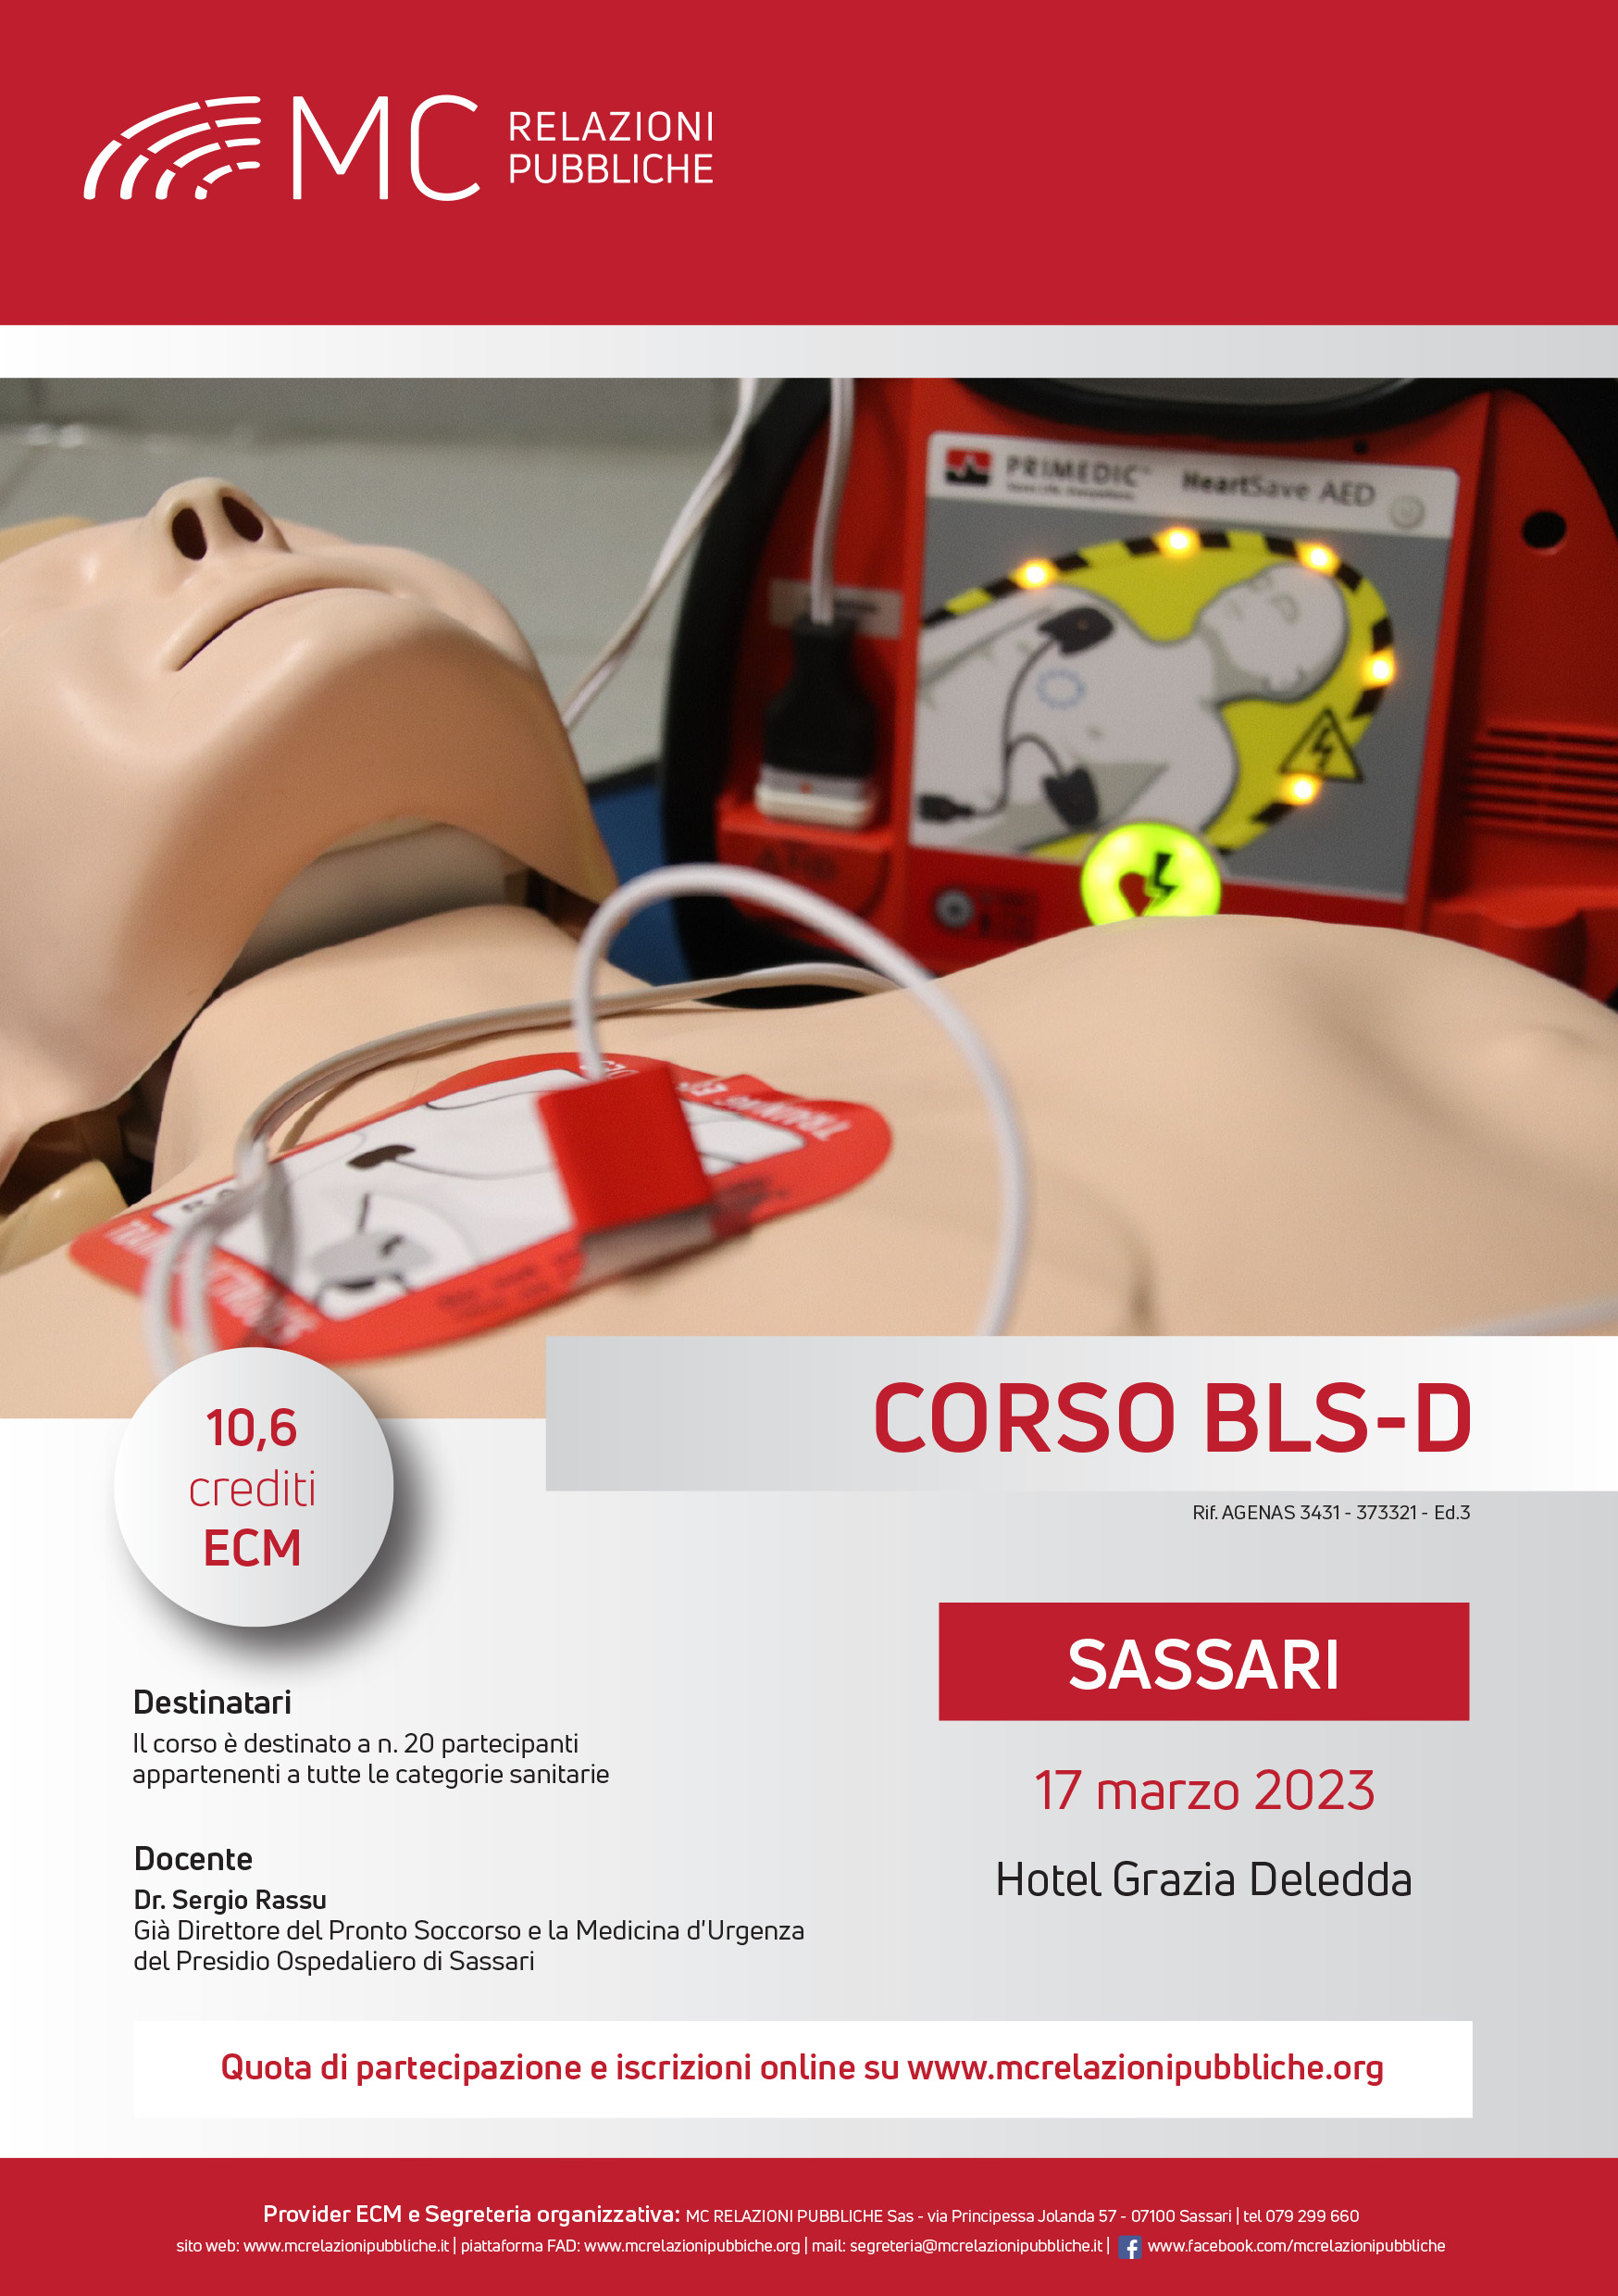 Corso BLS-D. Basic life support-defibrillation ed.3